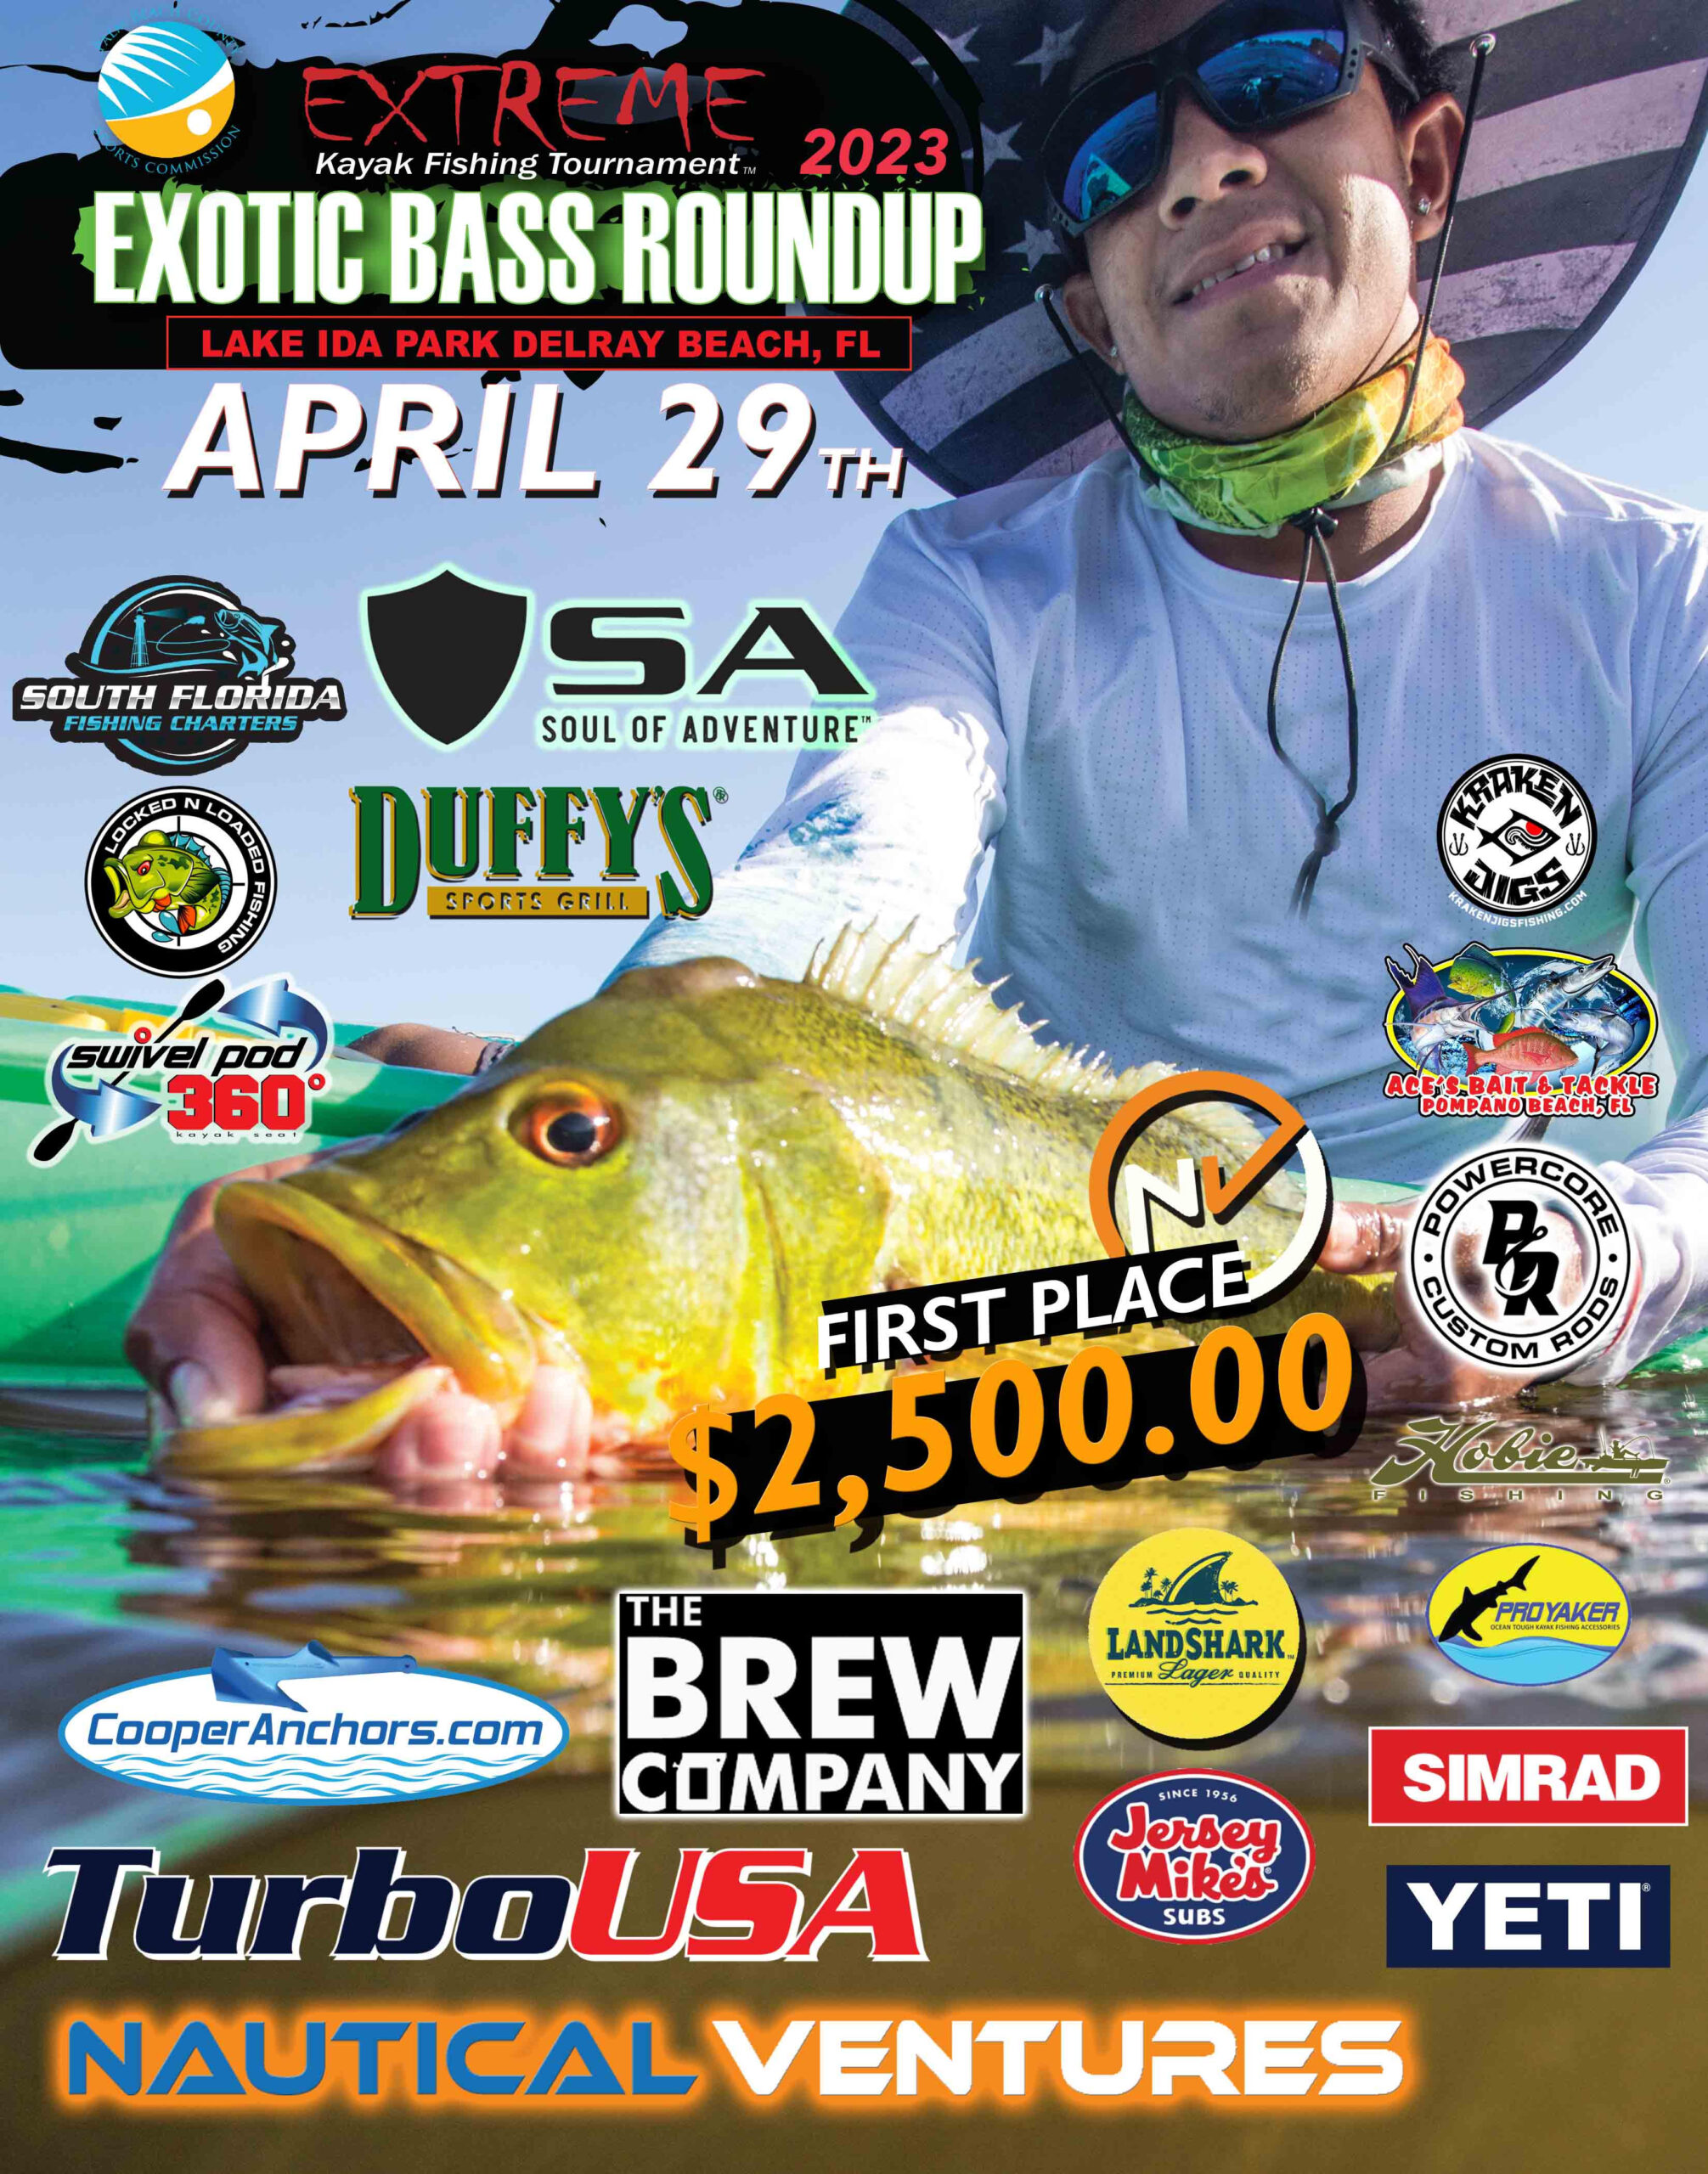 EXTREME KAYAK FISHING TOURNAMENT EXOTIC BASS ROUNDUP